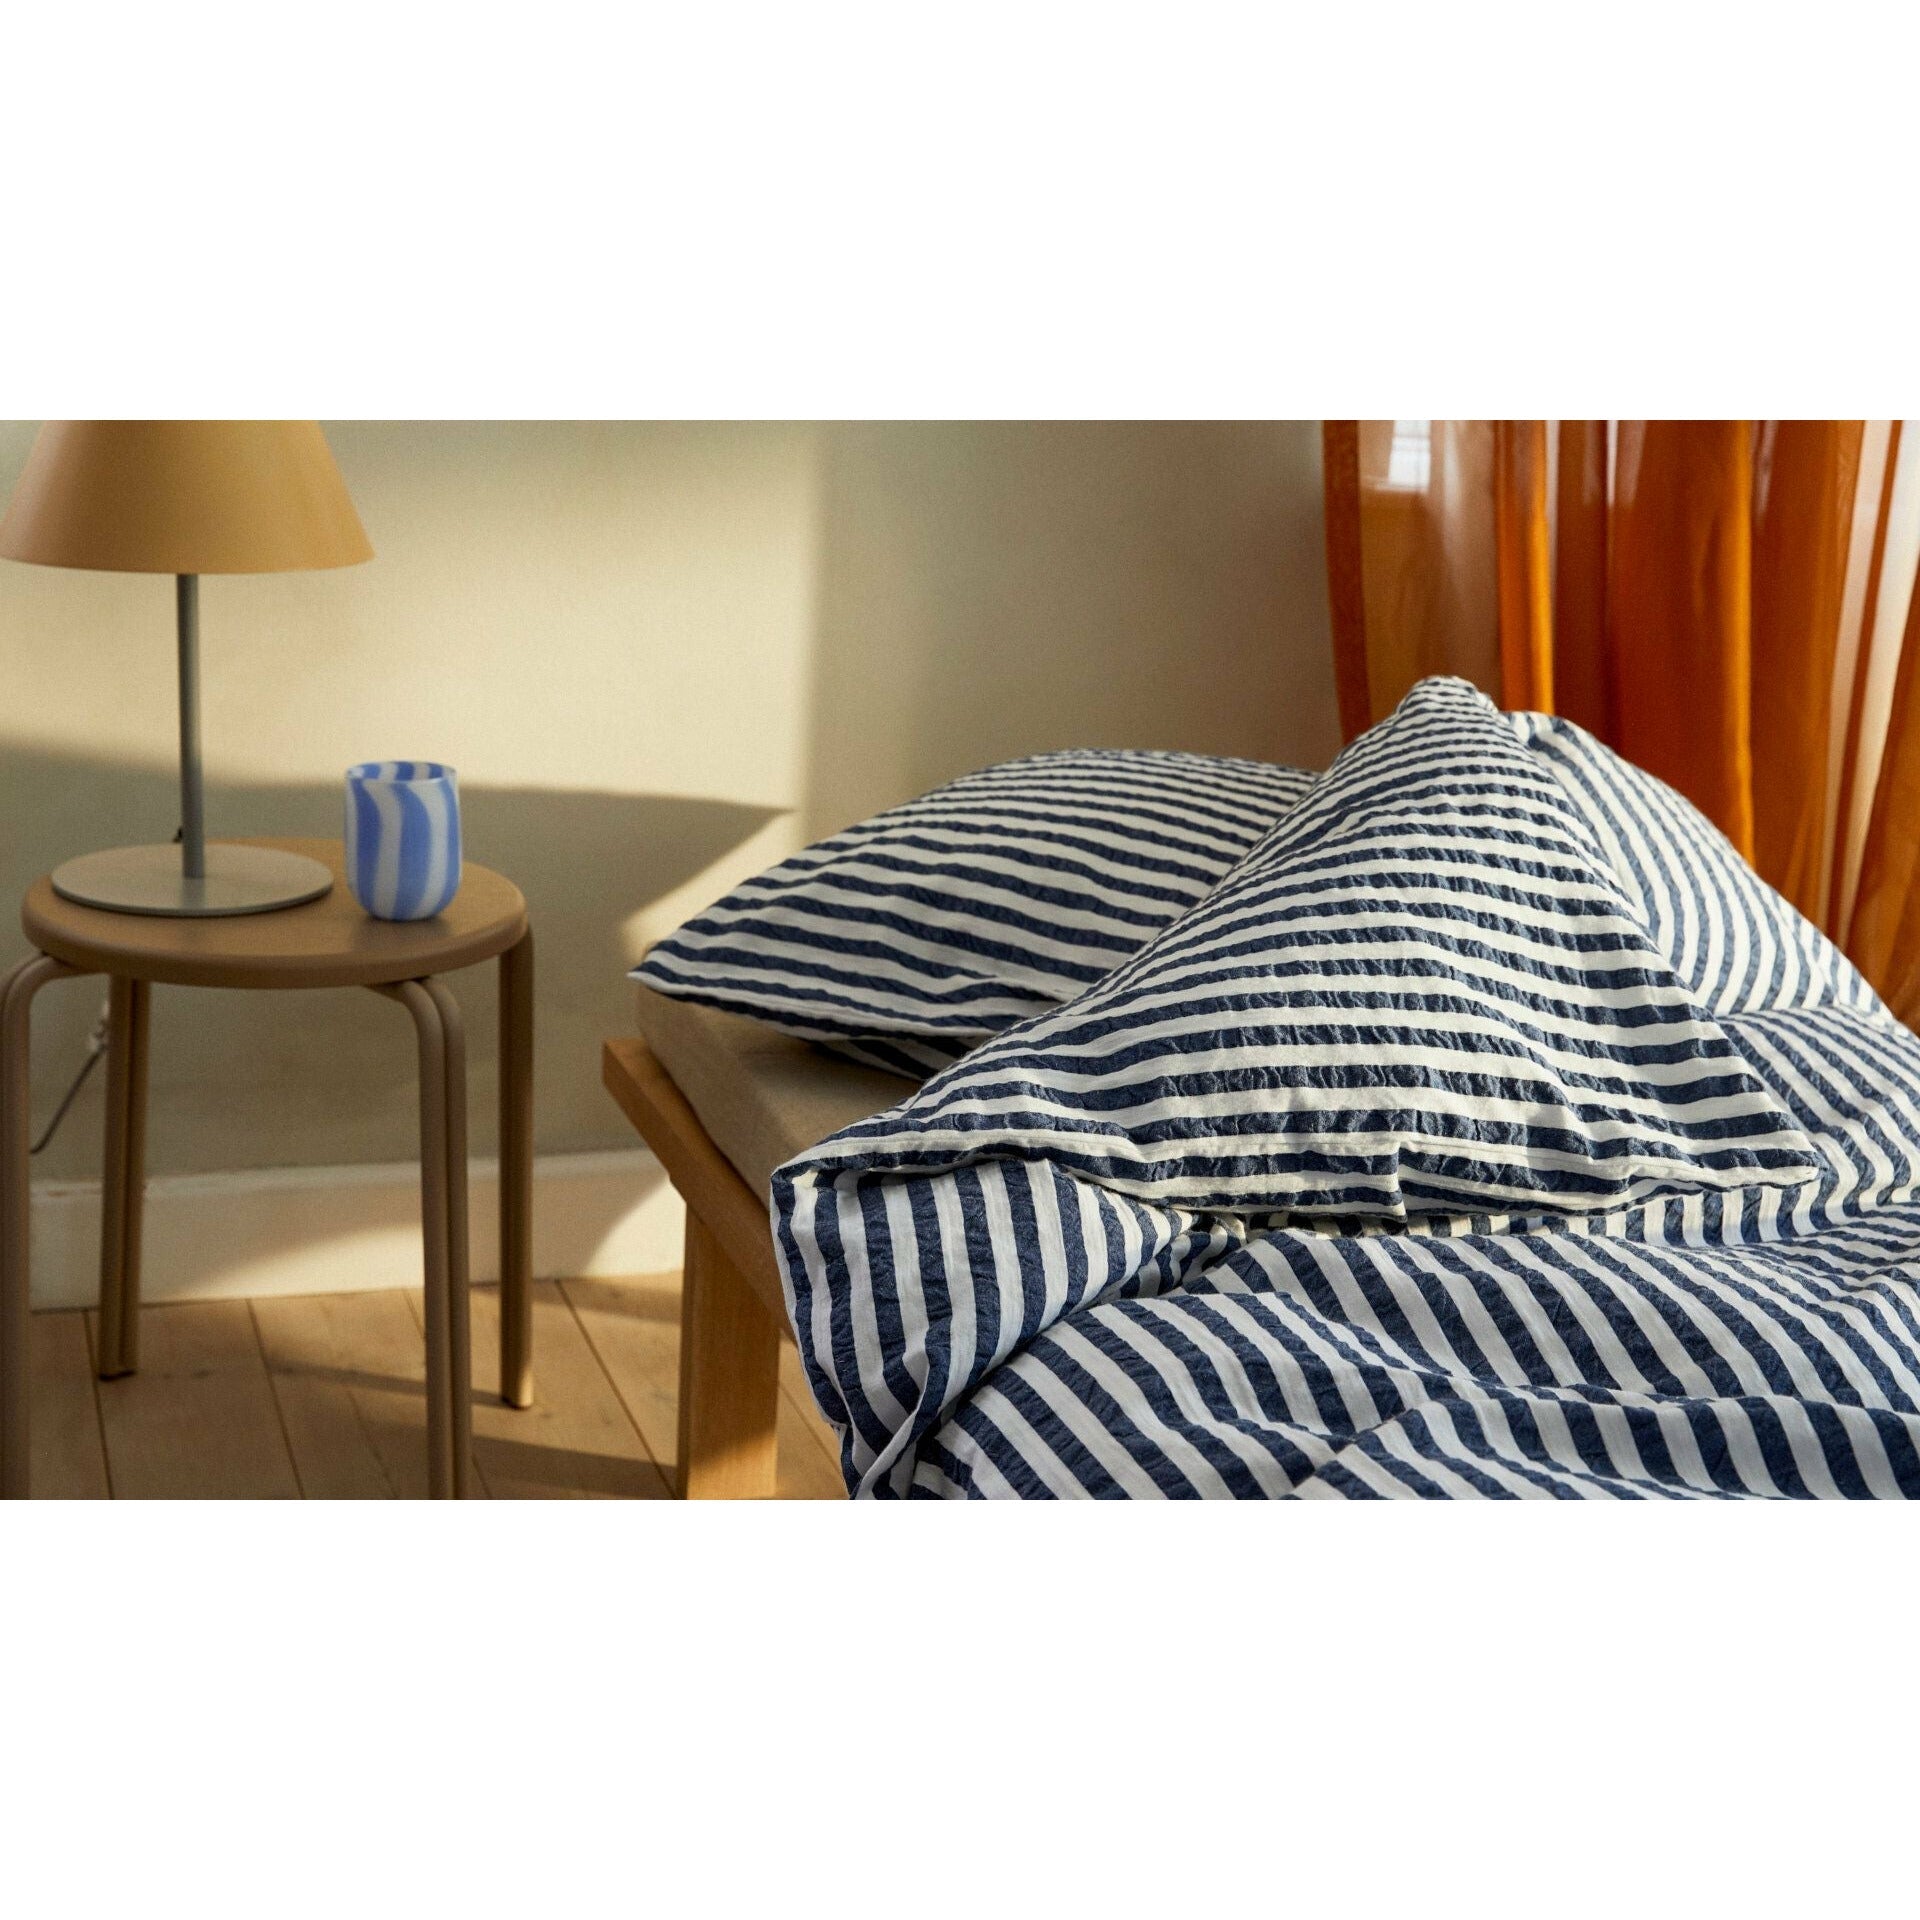 Juna Bæk & Bølge linjer sängkläder 140x200 cm, mörkblå/vit